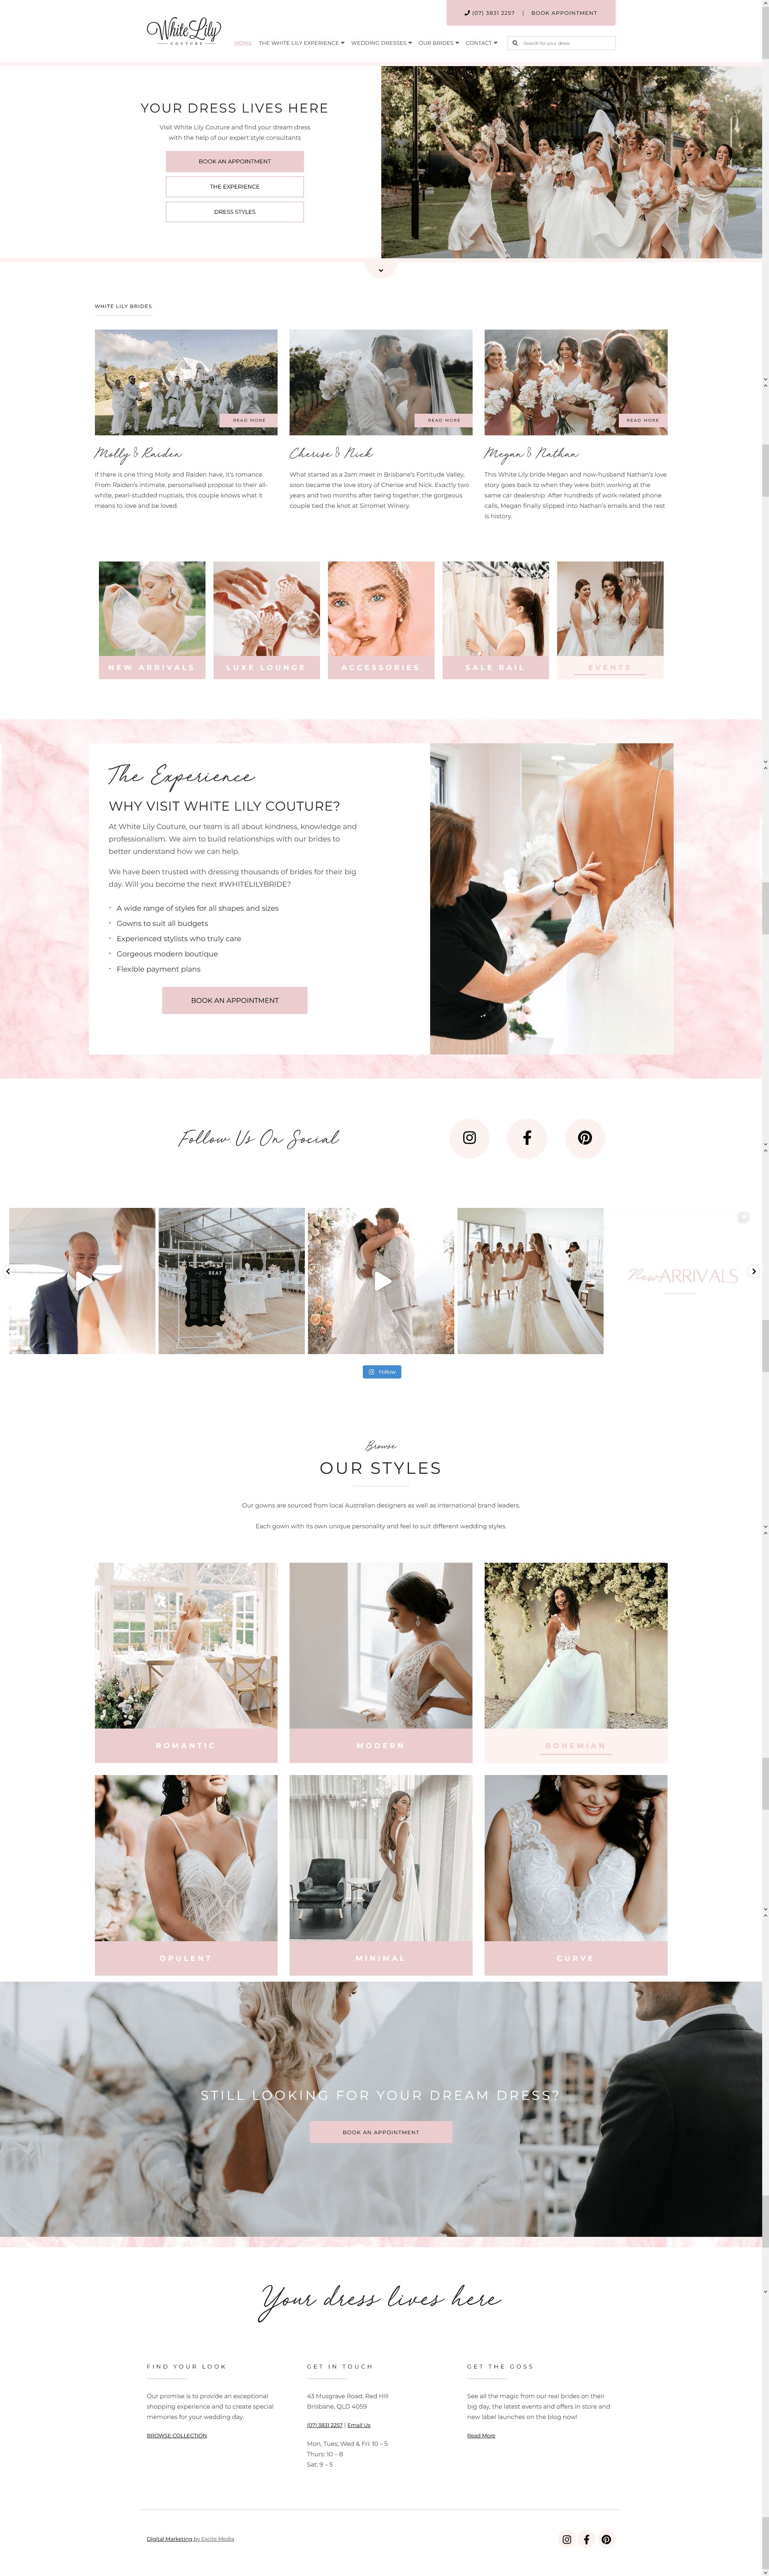 White Lily homepage design